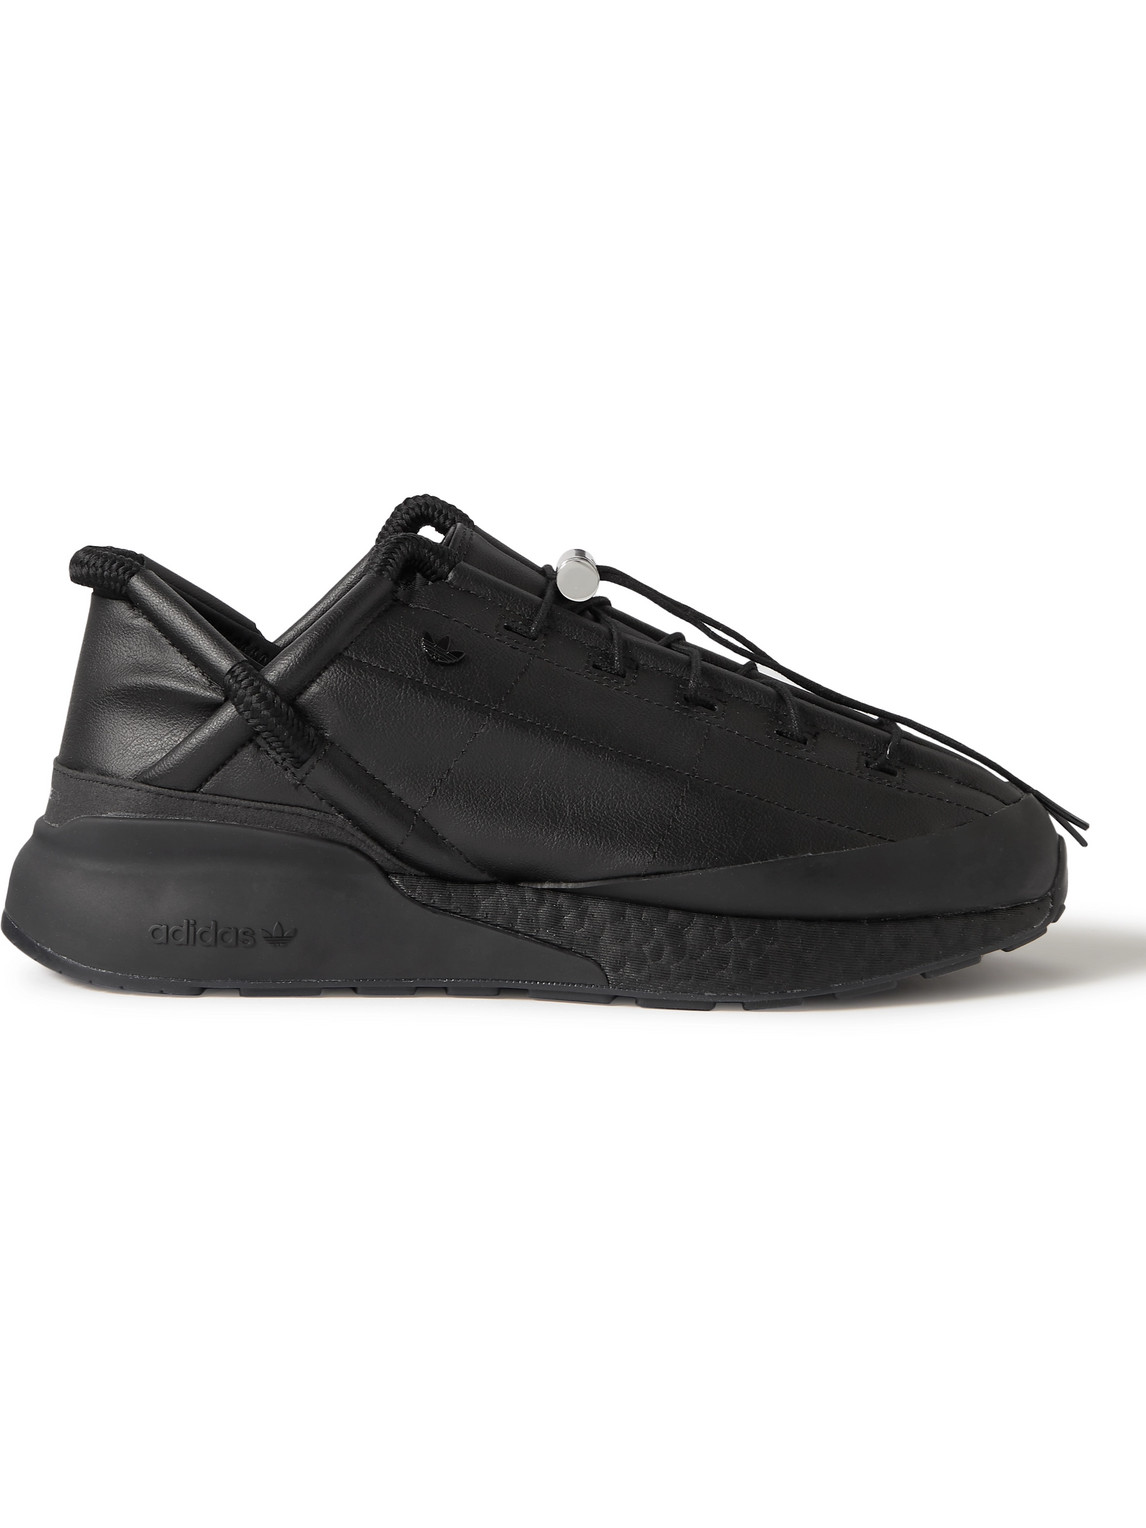 Adidas Consortium Craig Green Zx 2k Phormar Ii Leather Sneakers In Black